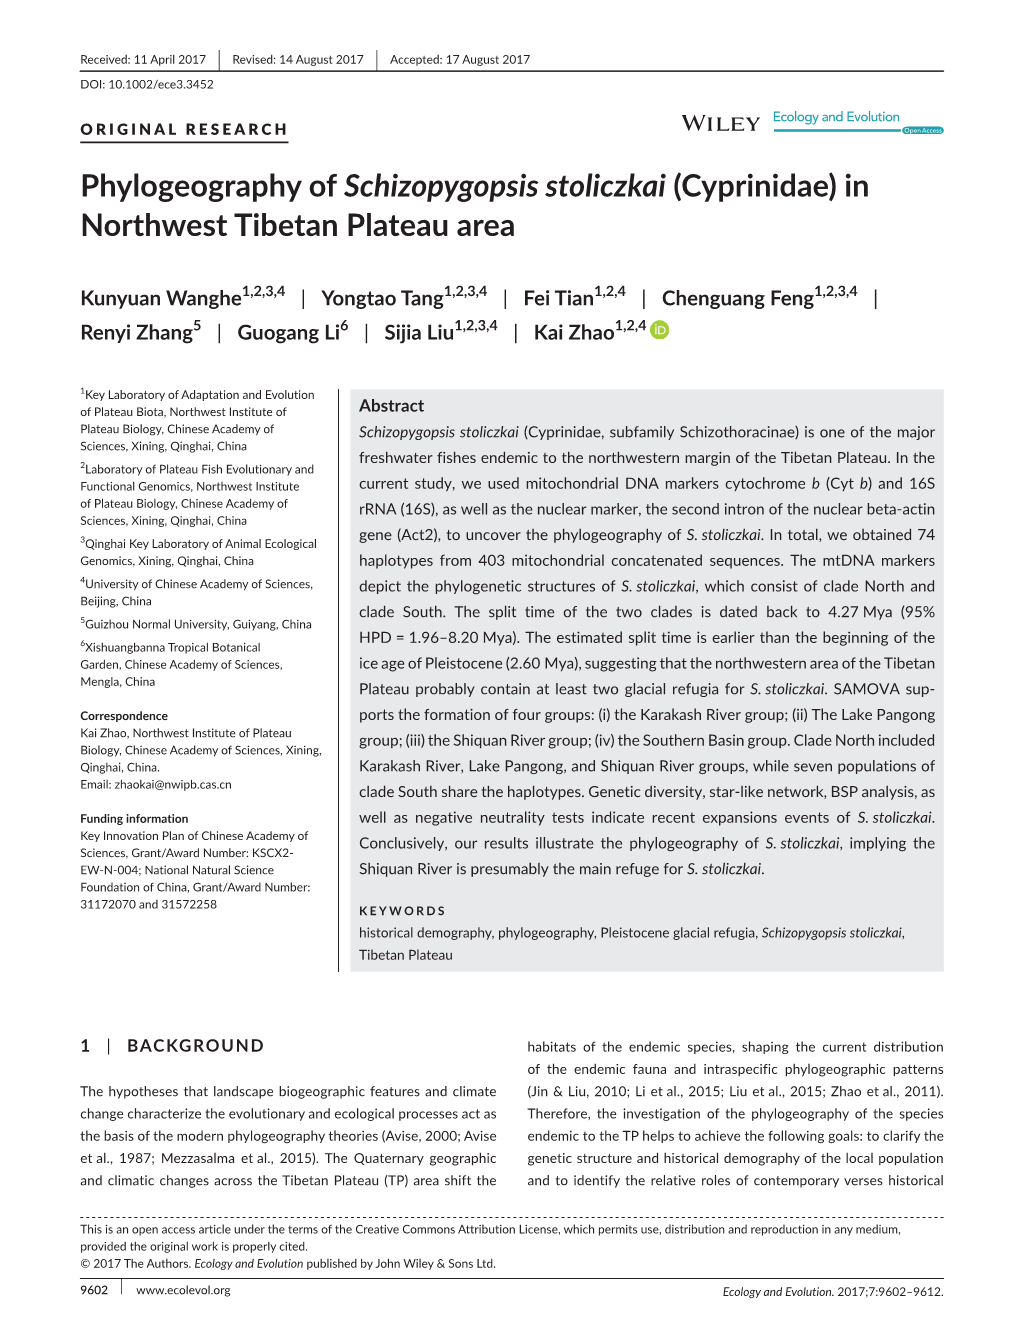 Phylogeography of Schizopygopsis Stoliczkai (Cyprinidae) in Northwest Tibetan Plateau Area